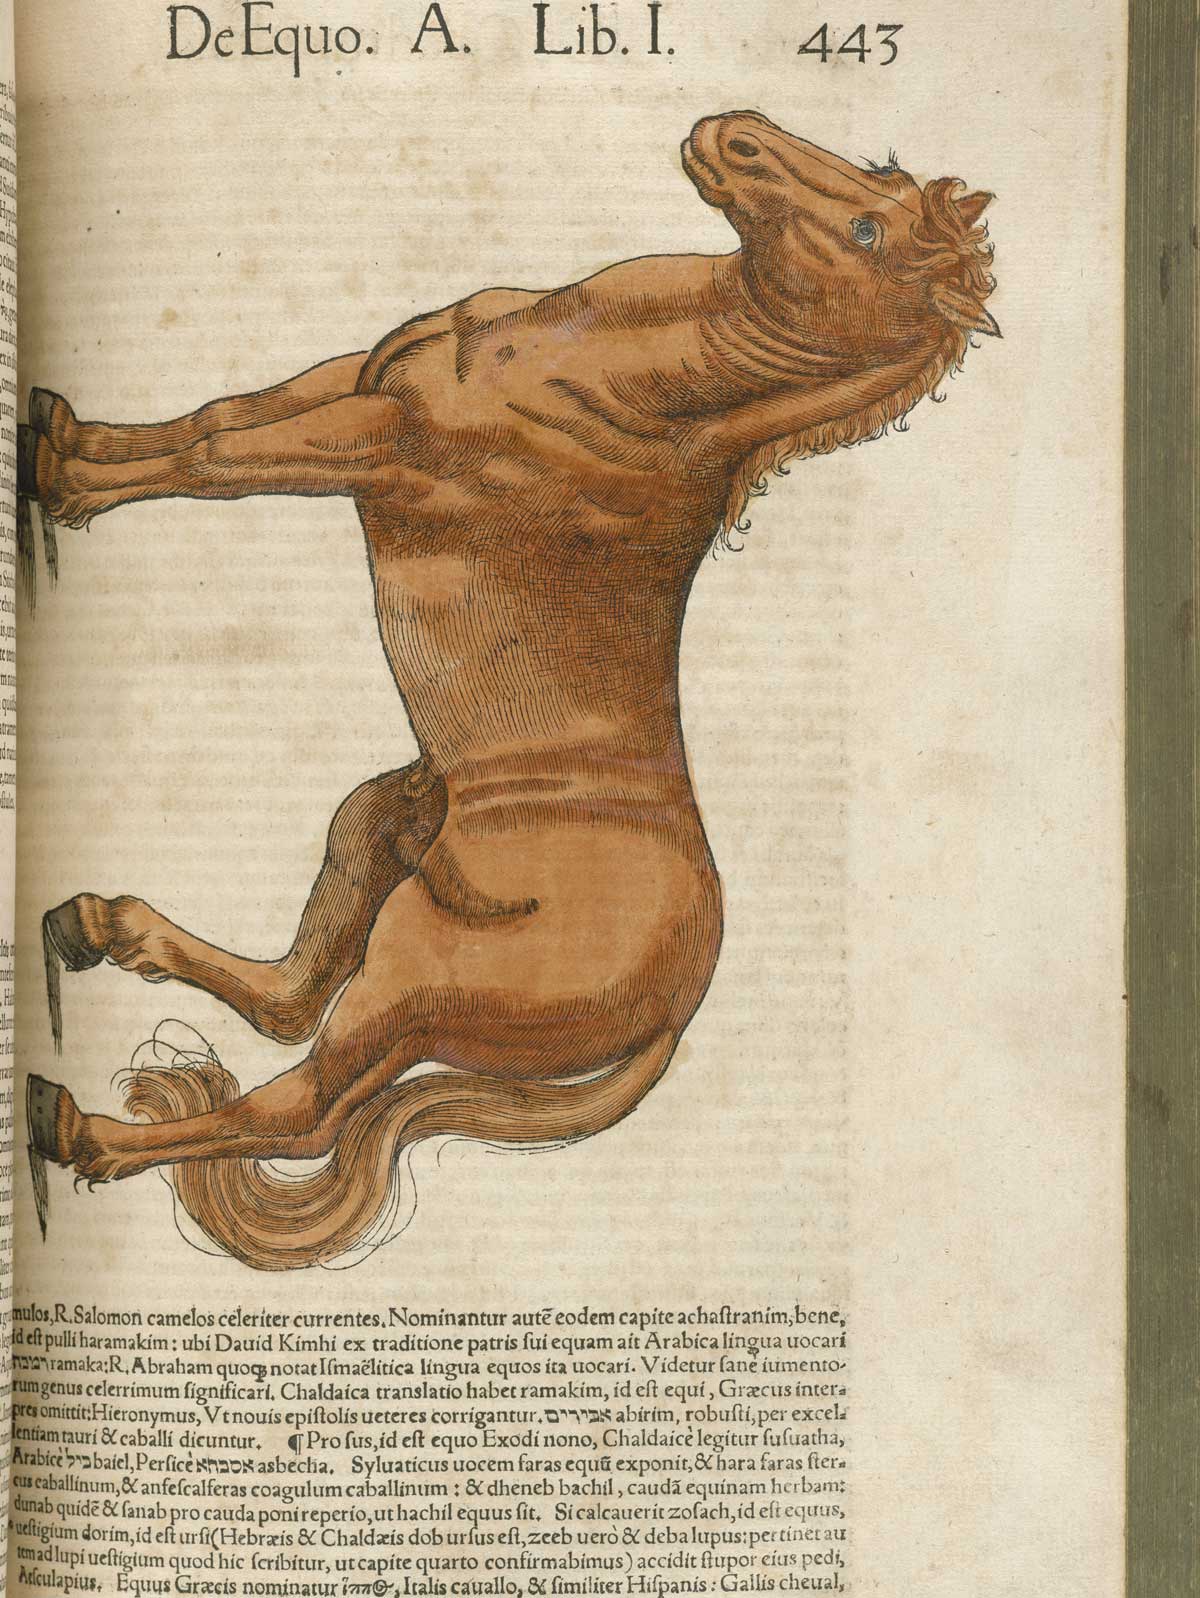 Page 443 from volume 1 of Conrad Gessner's Conradi Gesneri medici Tigurini Historiae animalium, featuring the colored woodcut of a brown horse.